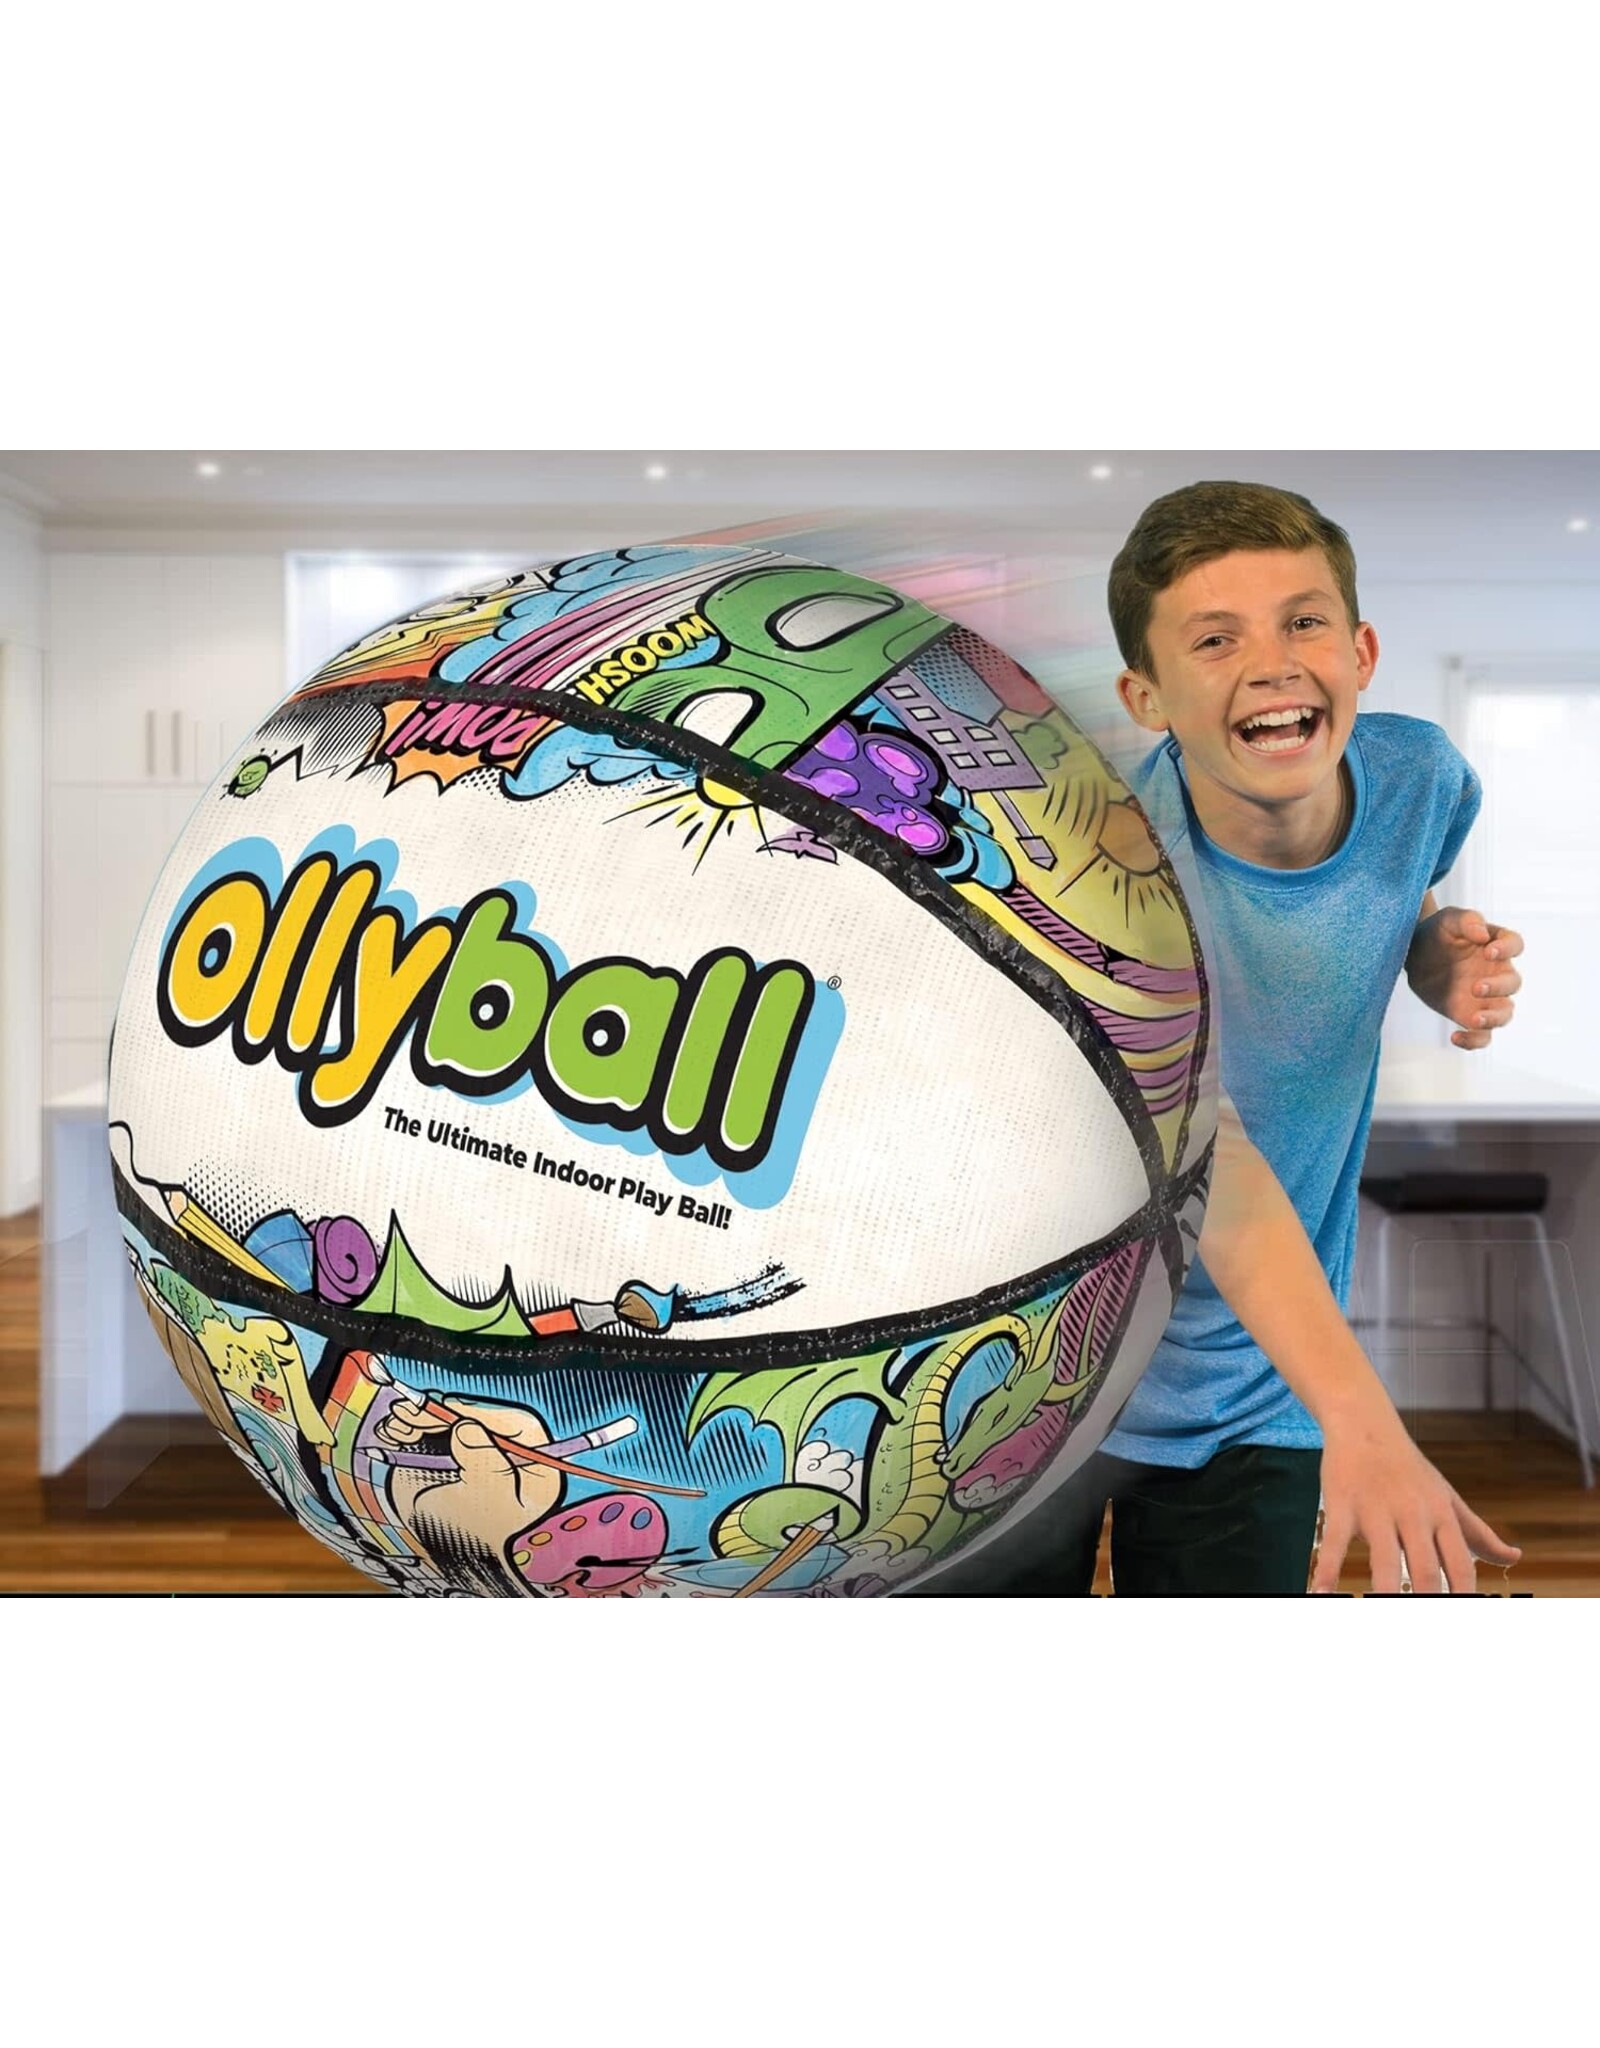 Ollyball Classic